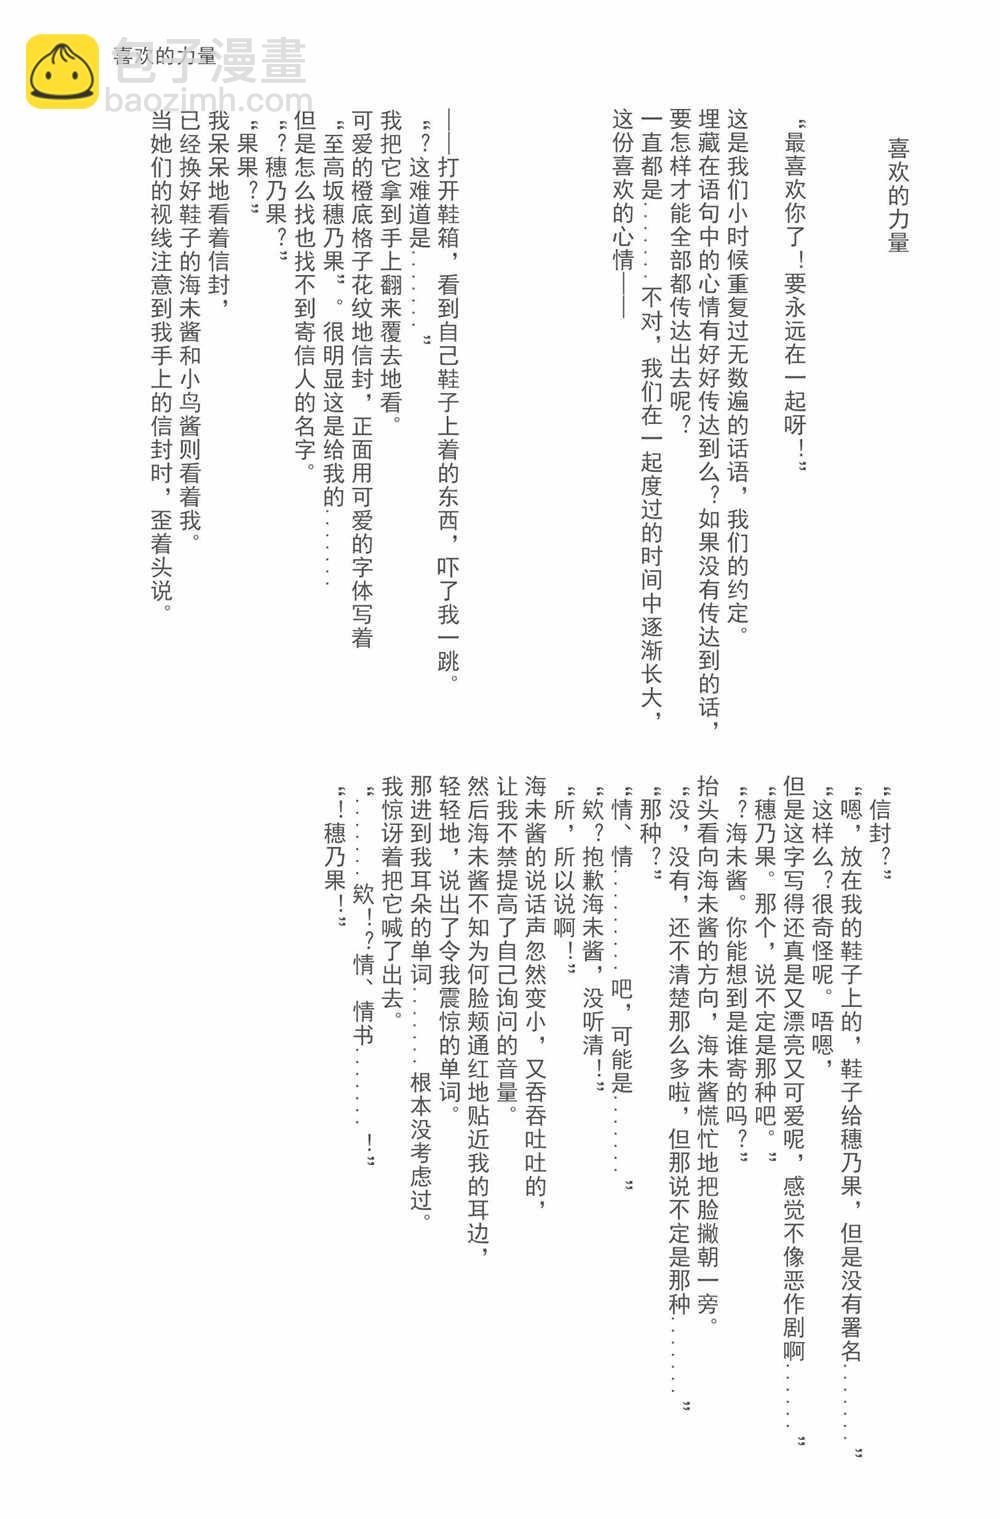 Anemone a la carte - 第1話(2/2) - 5